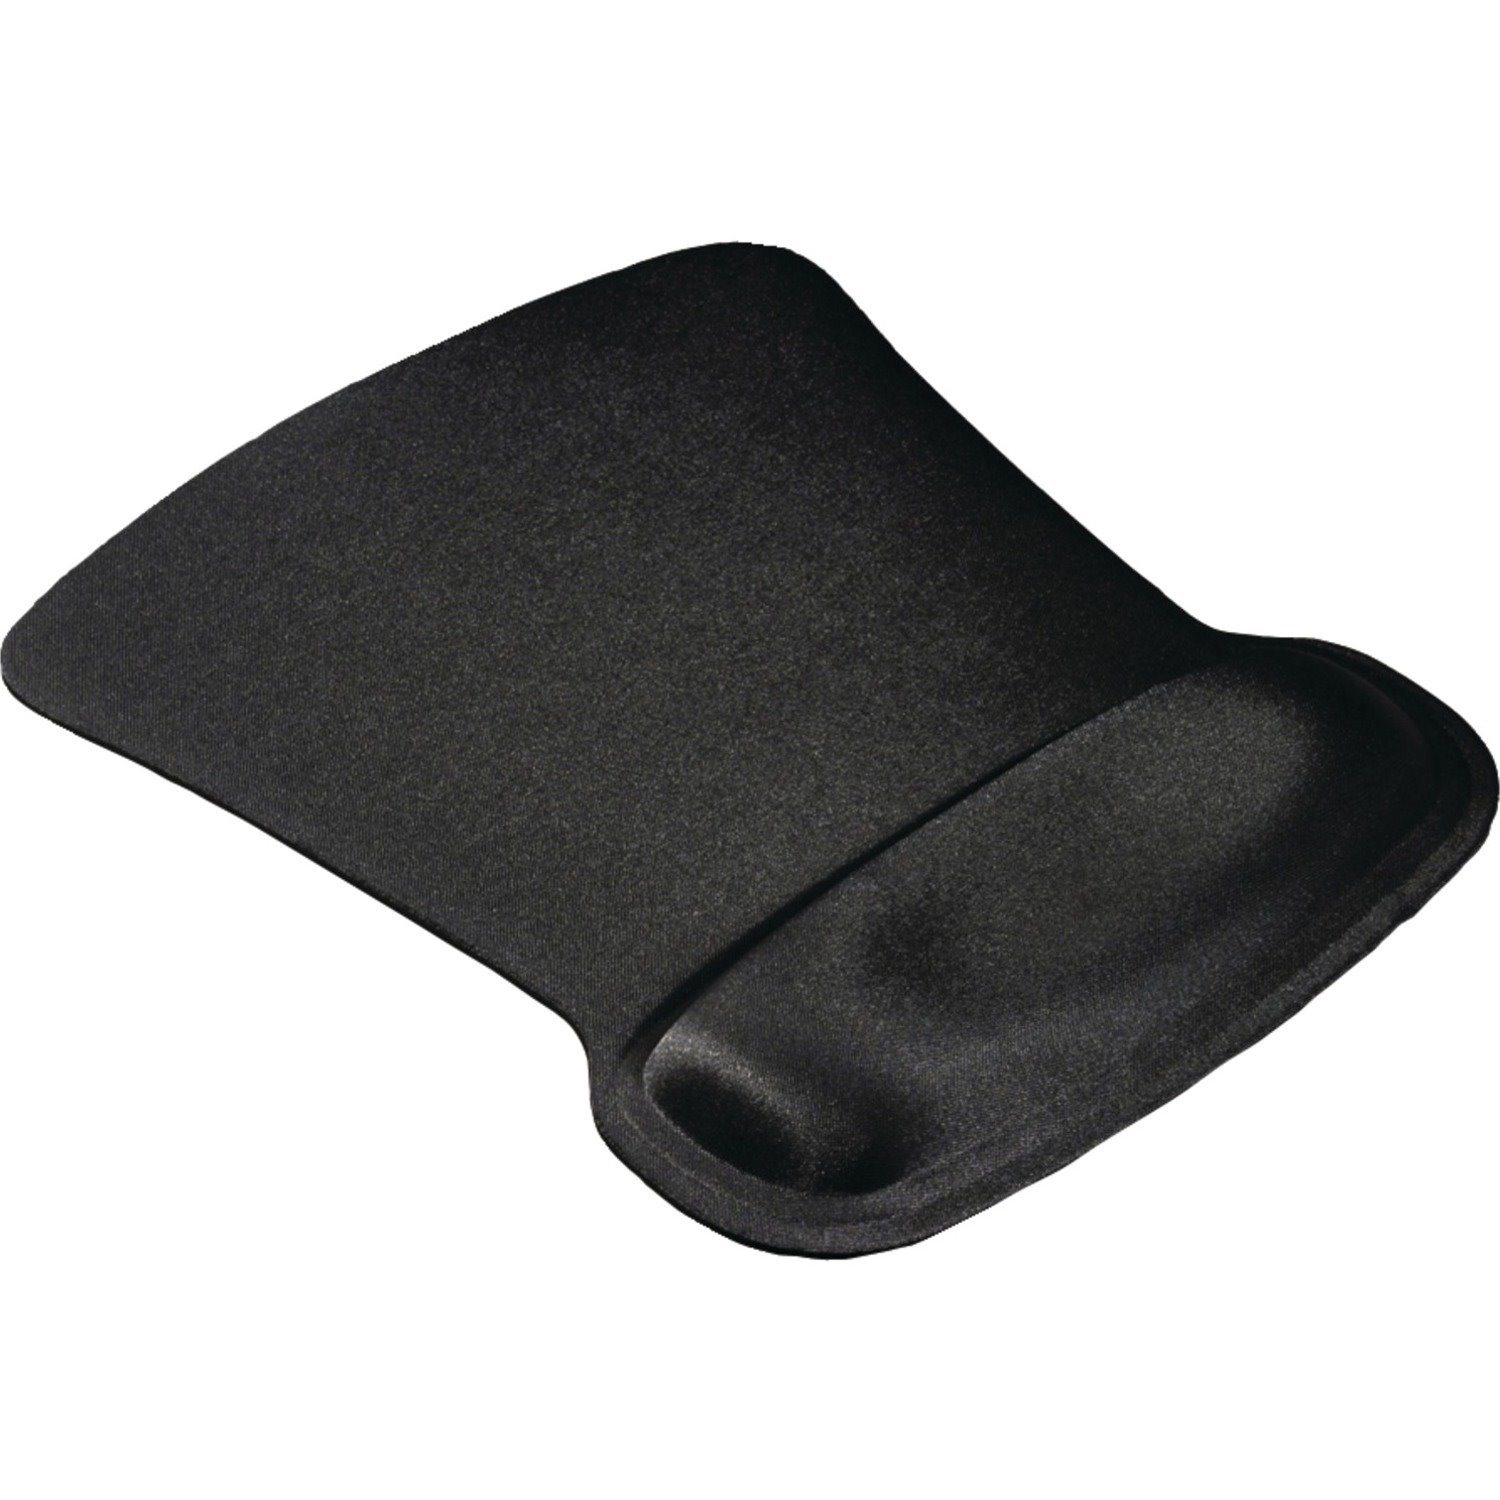 Allsop Ergoprene Gel Mouse Pad with Wrist Rest - Black - (30191)